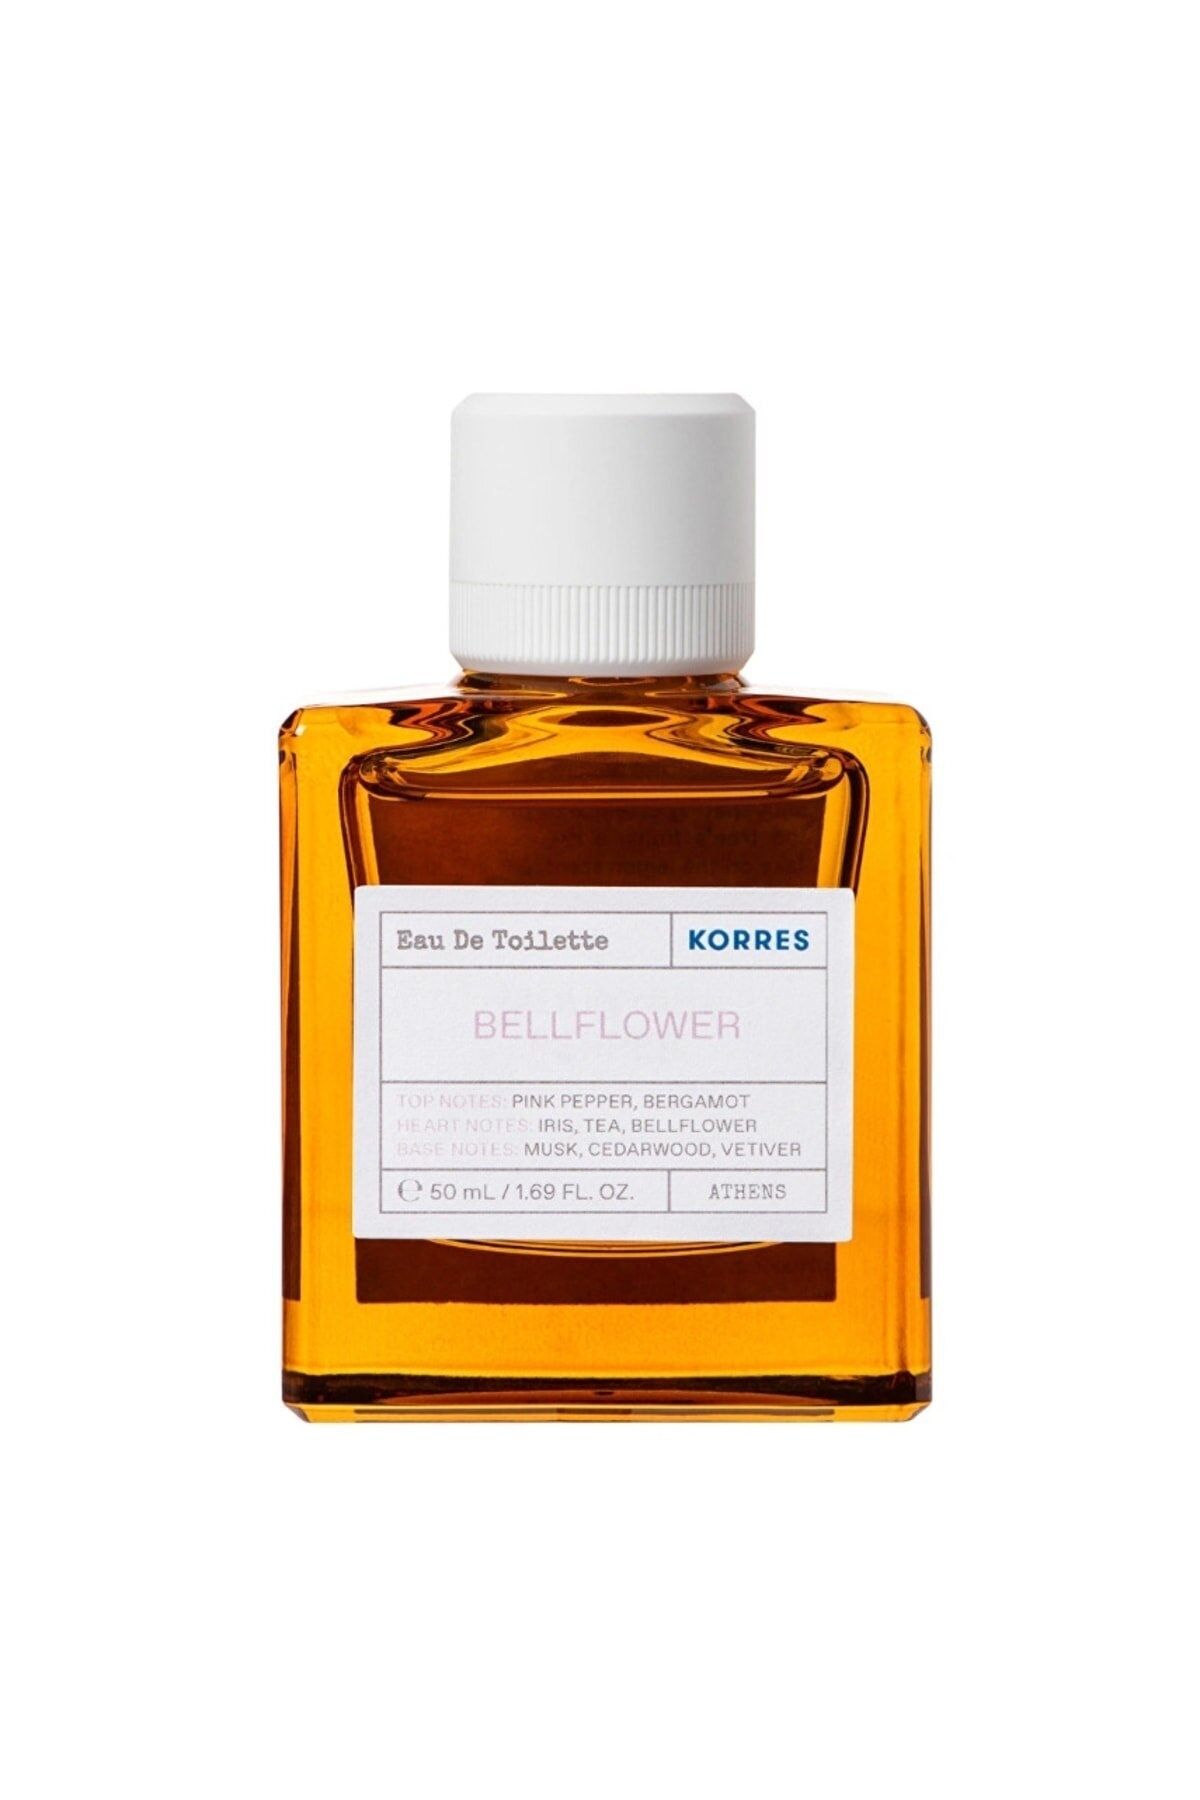 Korres Bellflower Edt Pink Pepper Bergamot Iris Tea Parfume 50 Ml Lawesbüyülükoku